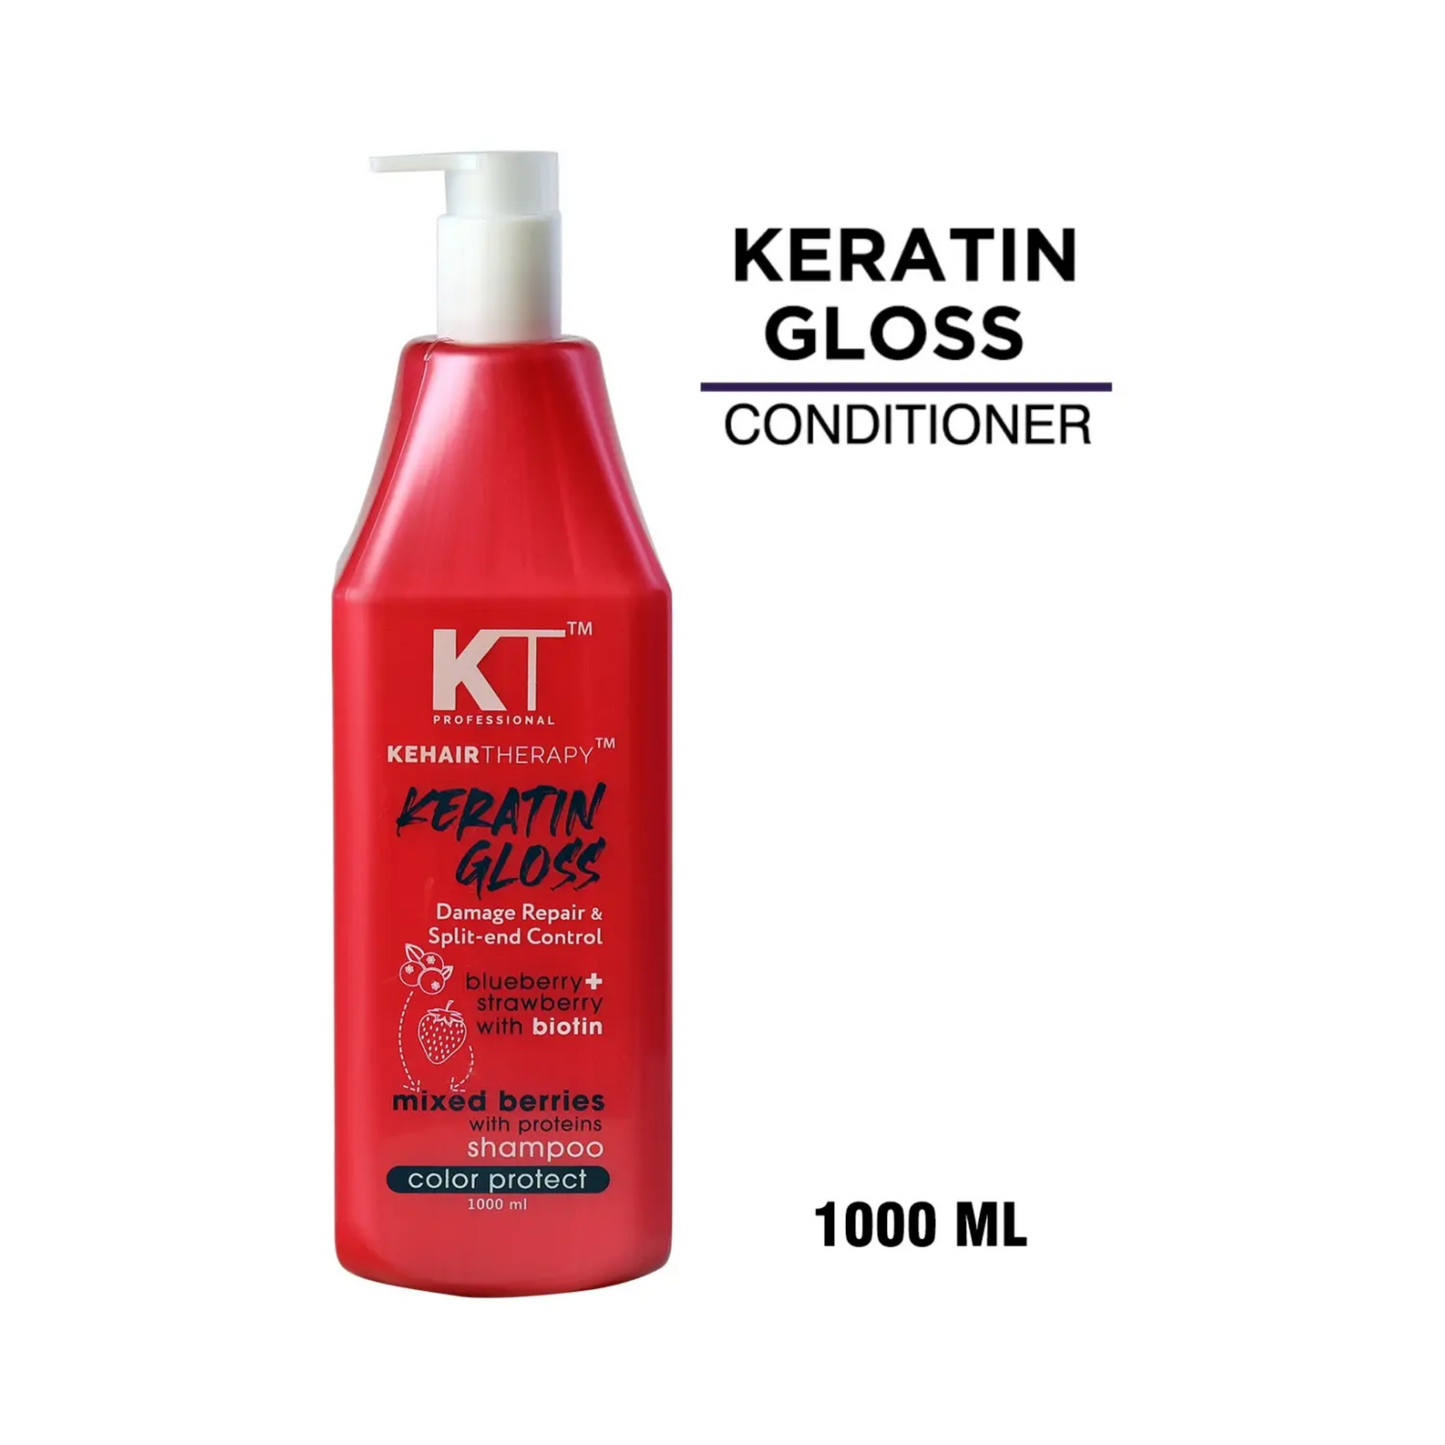 KT Professional Keratin Gloss Damage Repair & Split End Control Conditioner 1000ml